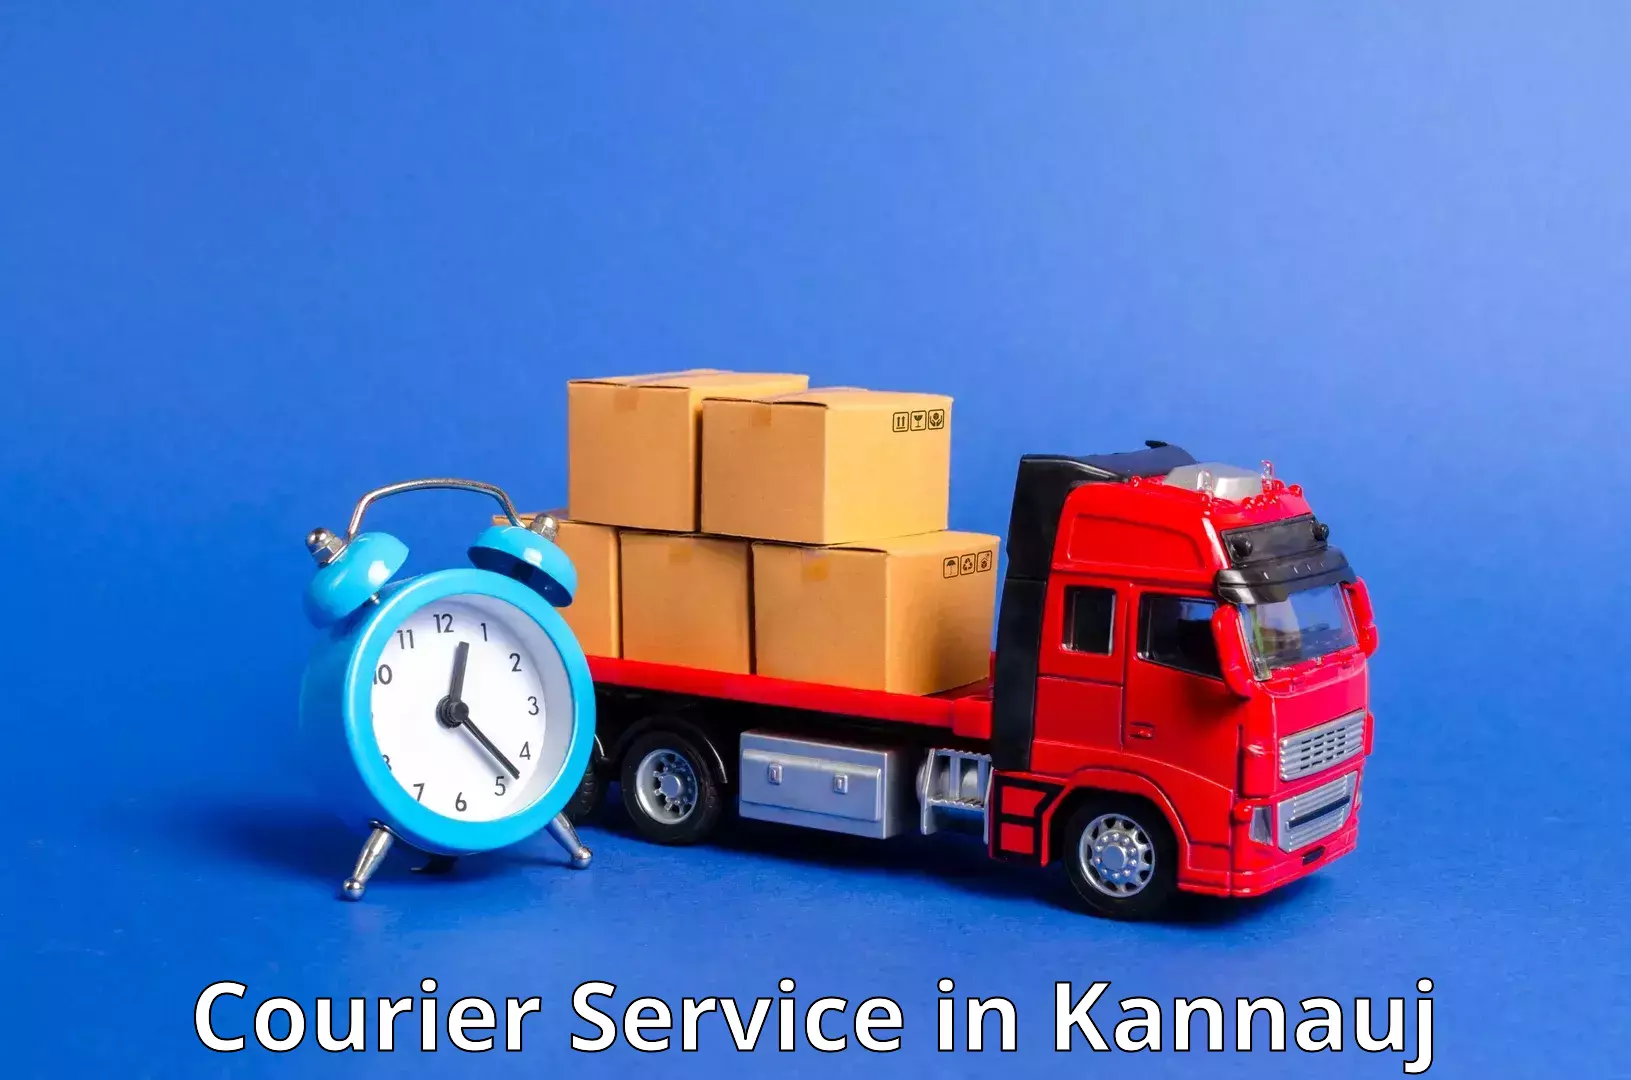 Express postal services in Kannauj